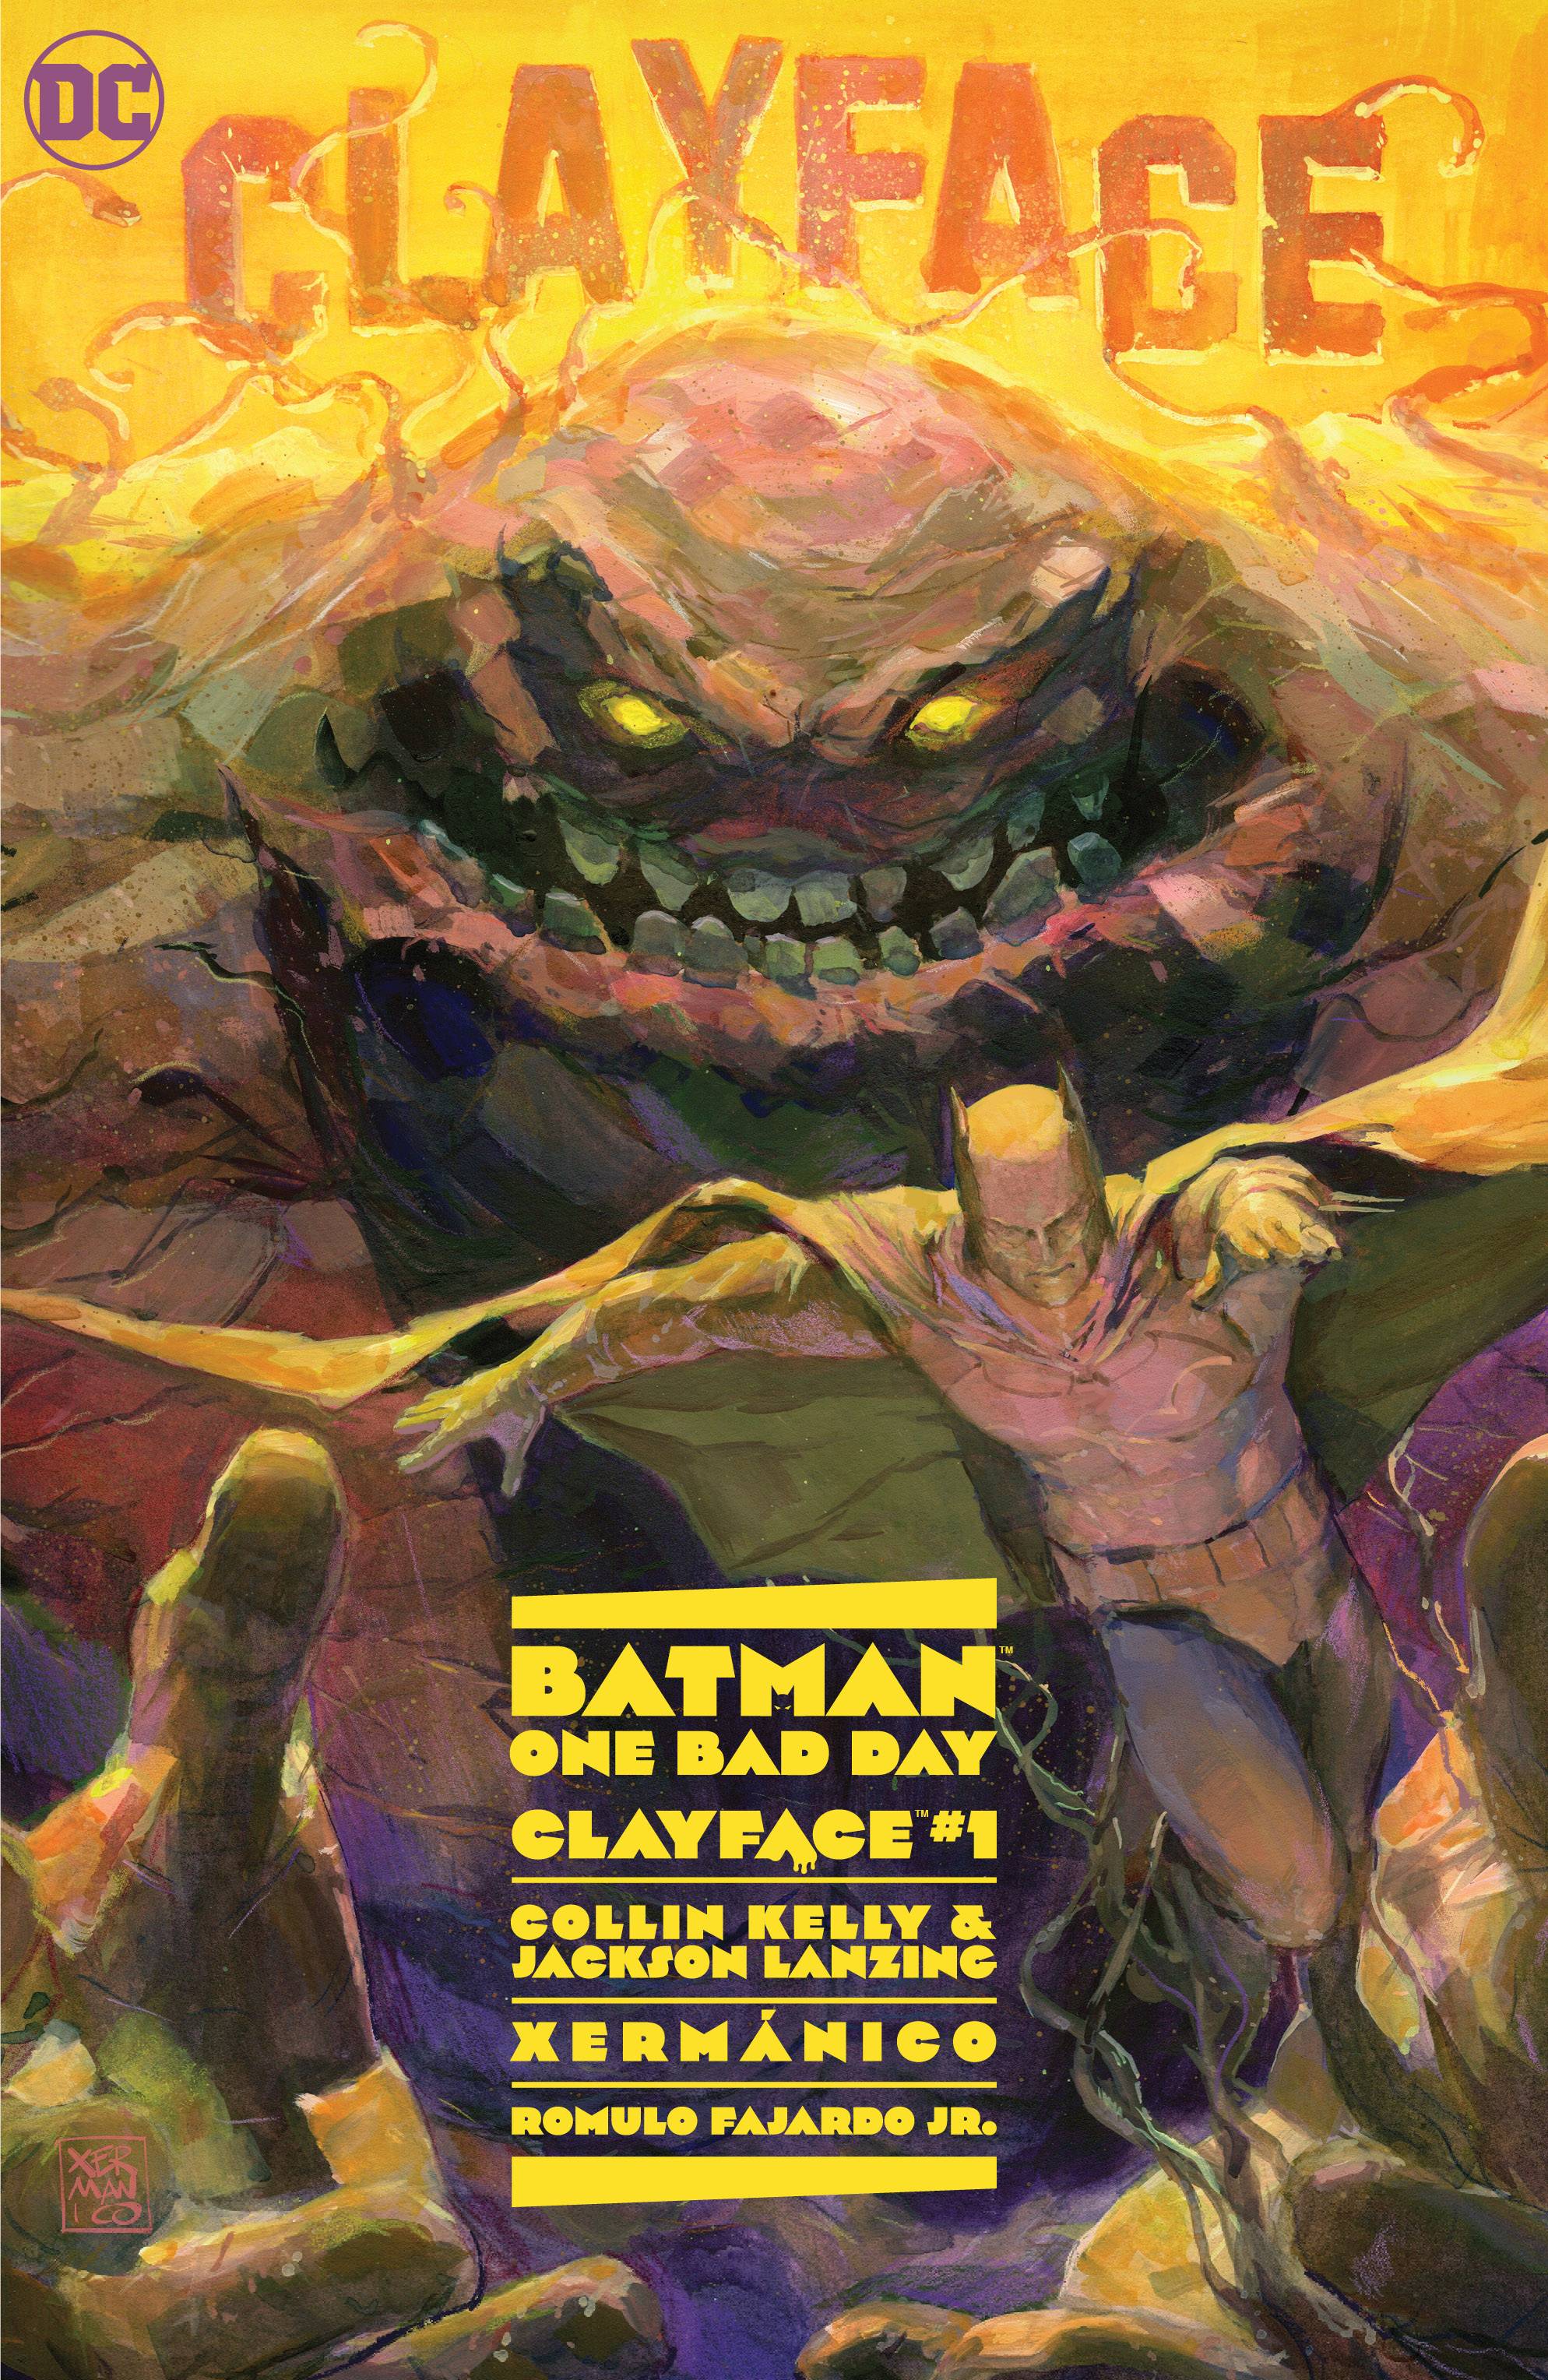 BATMAN ONE BAD DAY CLAYFACE #1 (ONE SHOT) CVR A XERMANICO DC COMICS (DEC22)